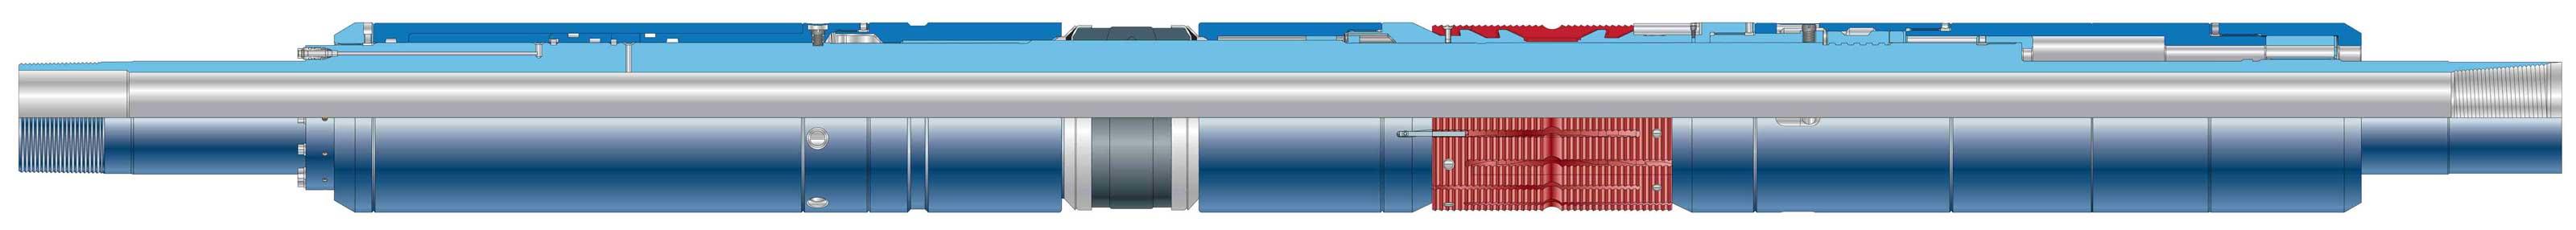 BluePack Ultra RH-MP ultrahigh-pressure retrievable hydraulic-set, multiport production packer